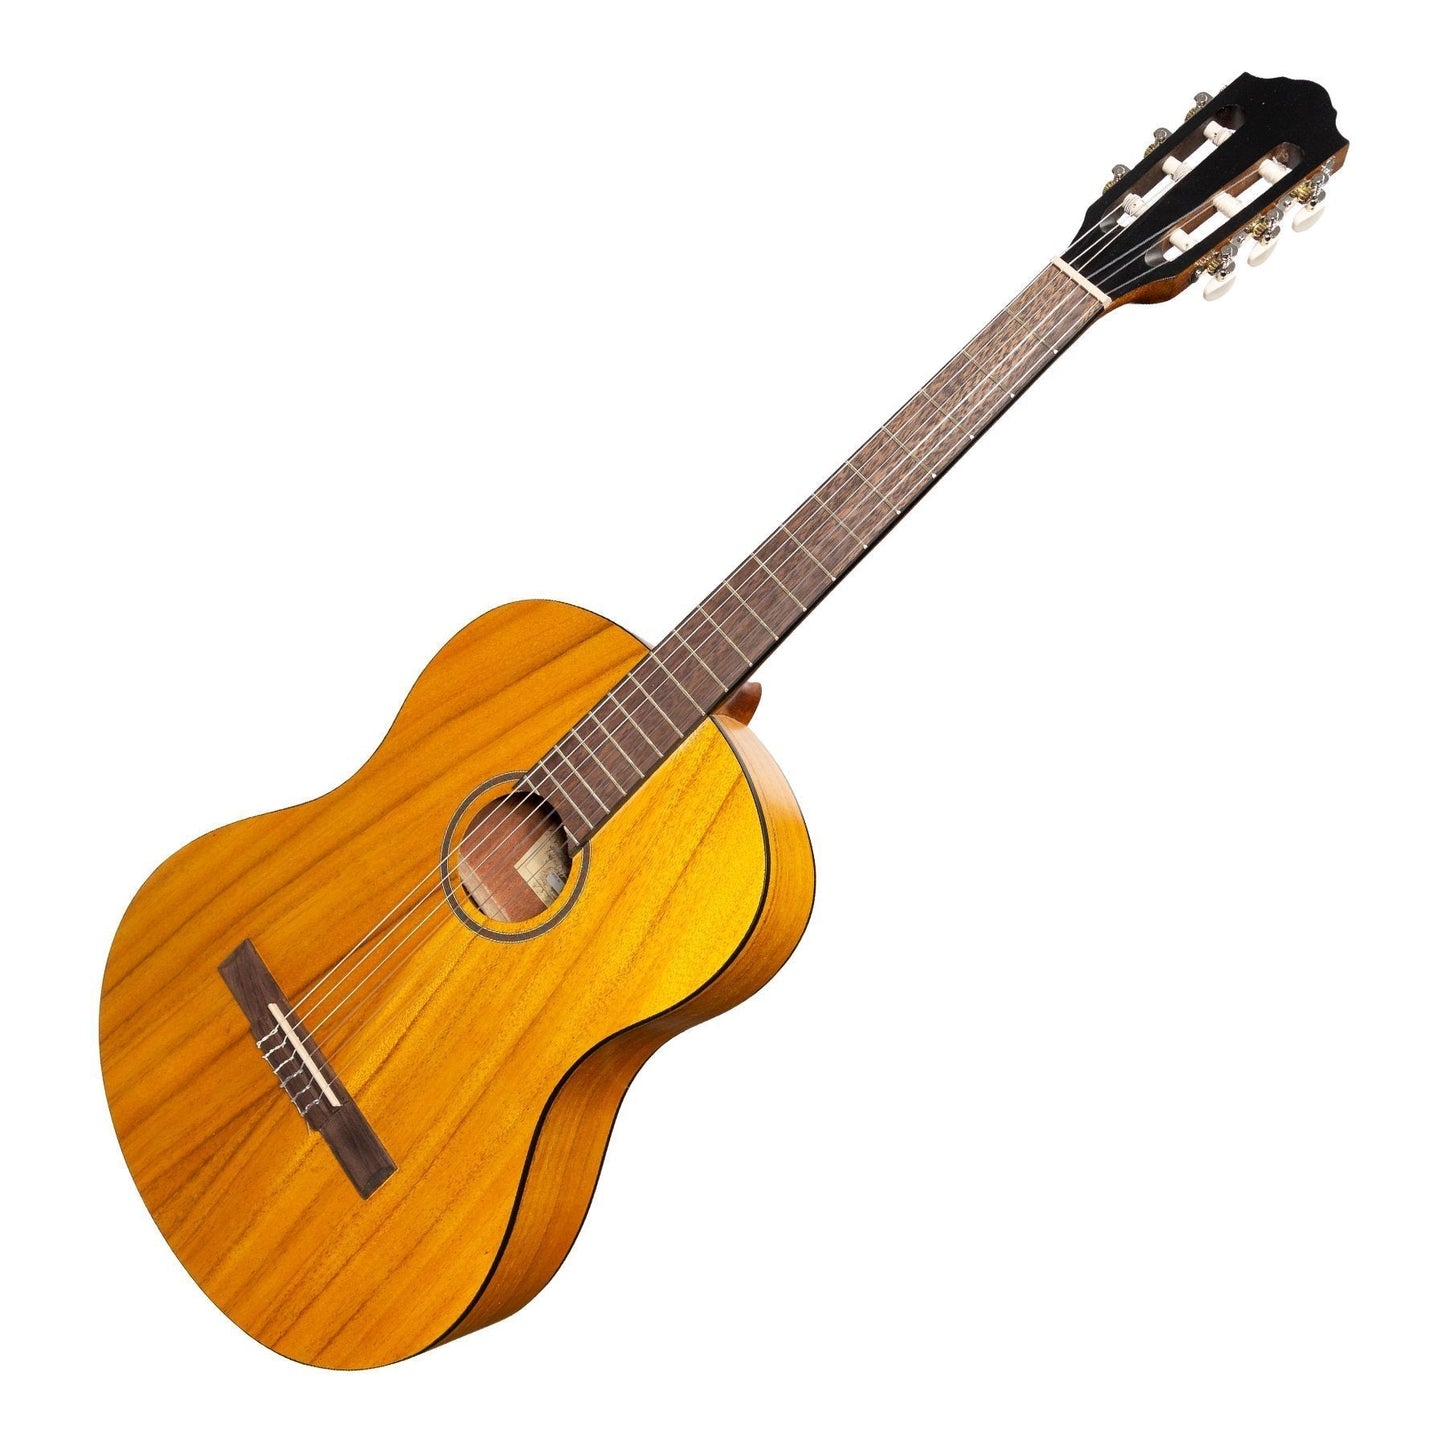 Martinez 'Slim Jim' Full Size Student Classical Guitar with Built In Tuner (Koa)